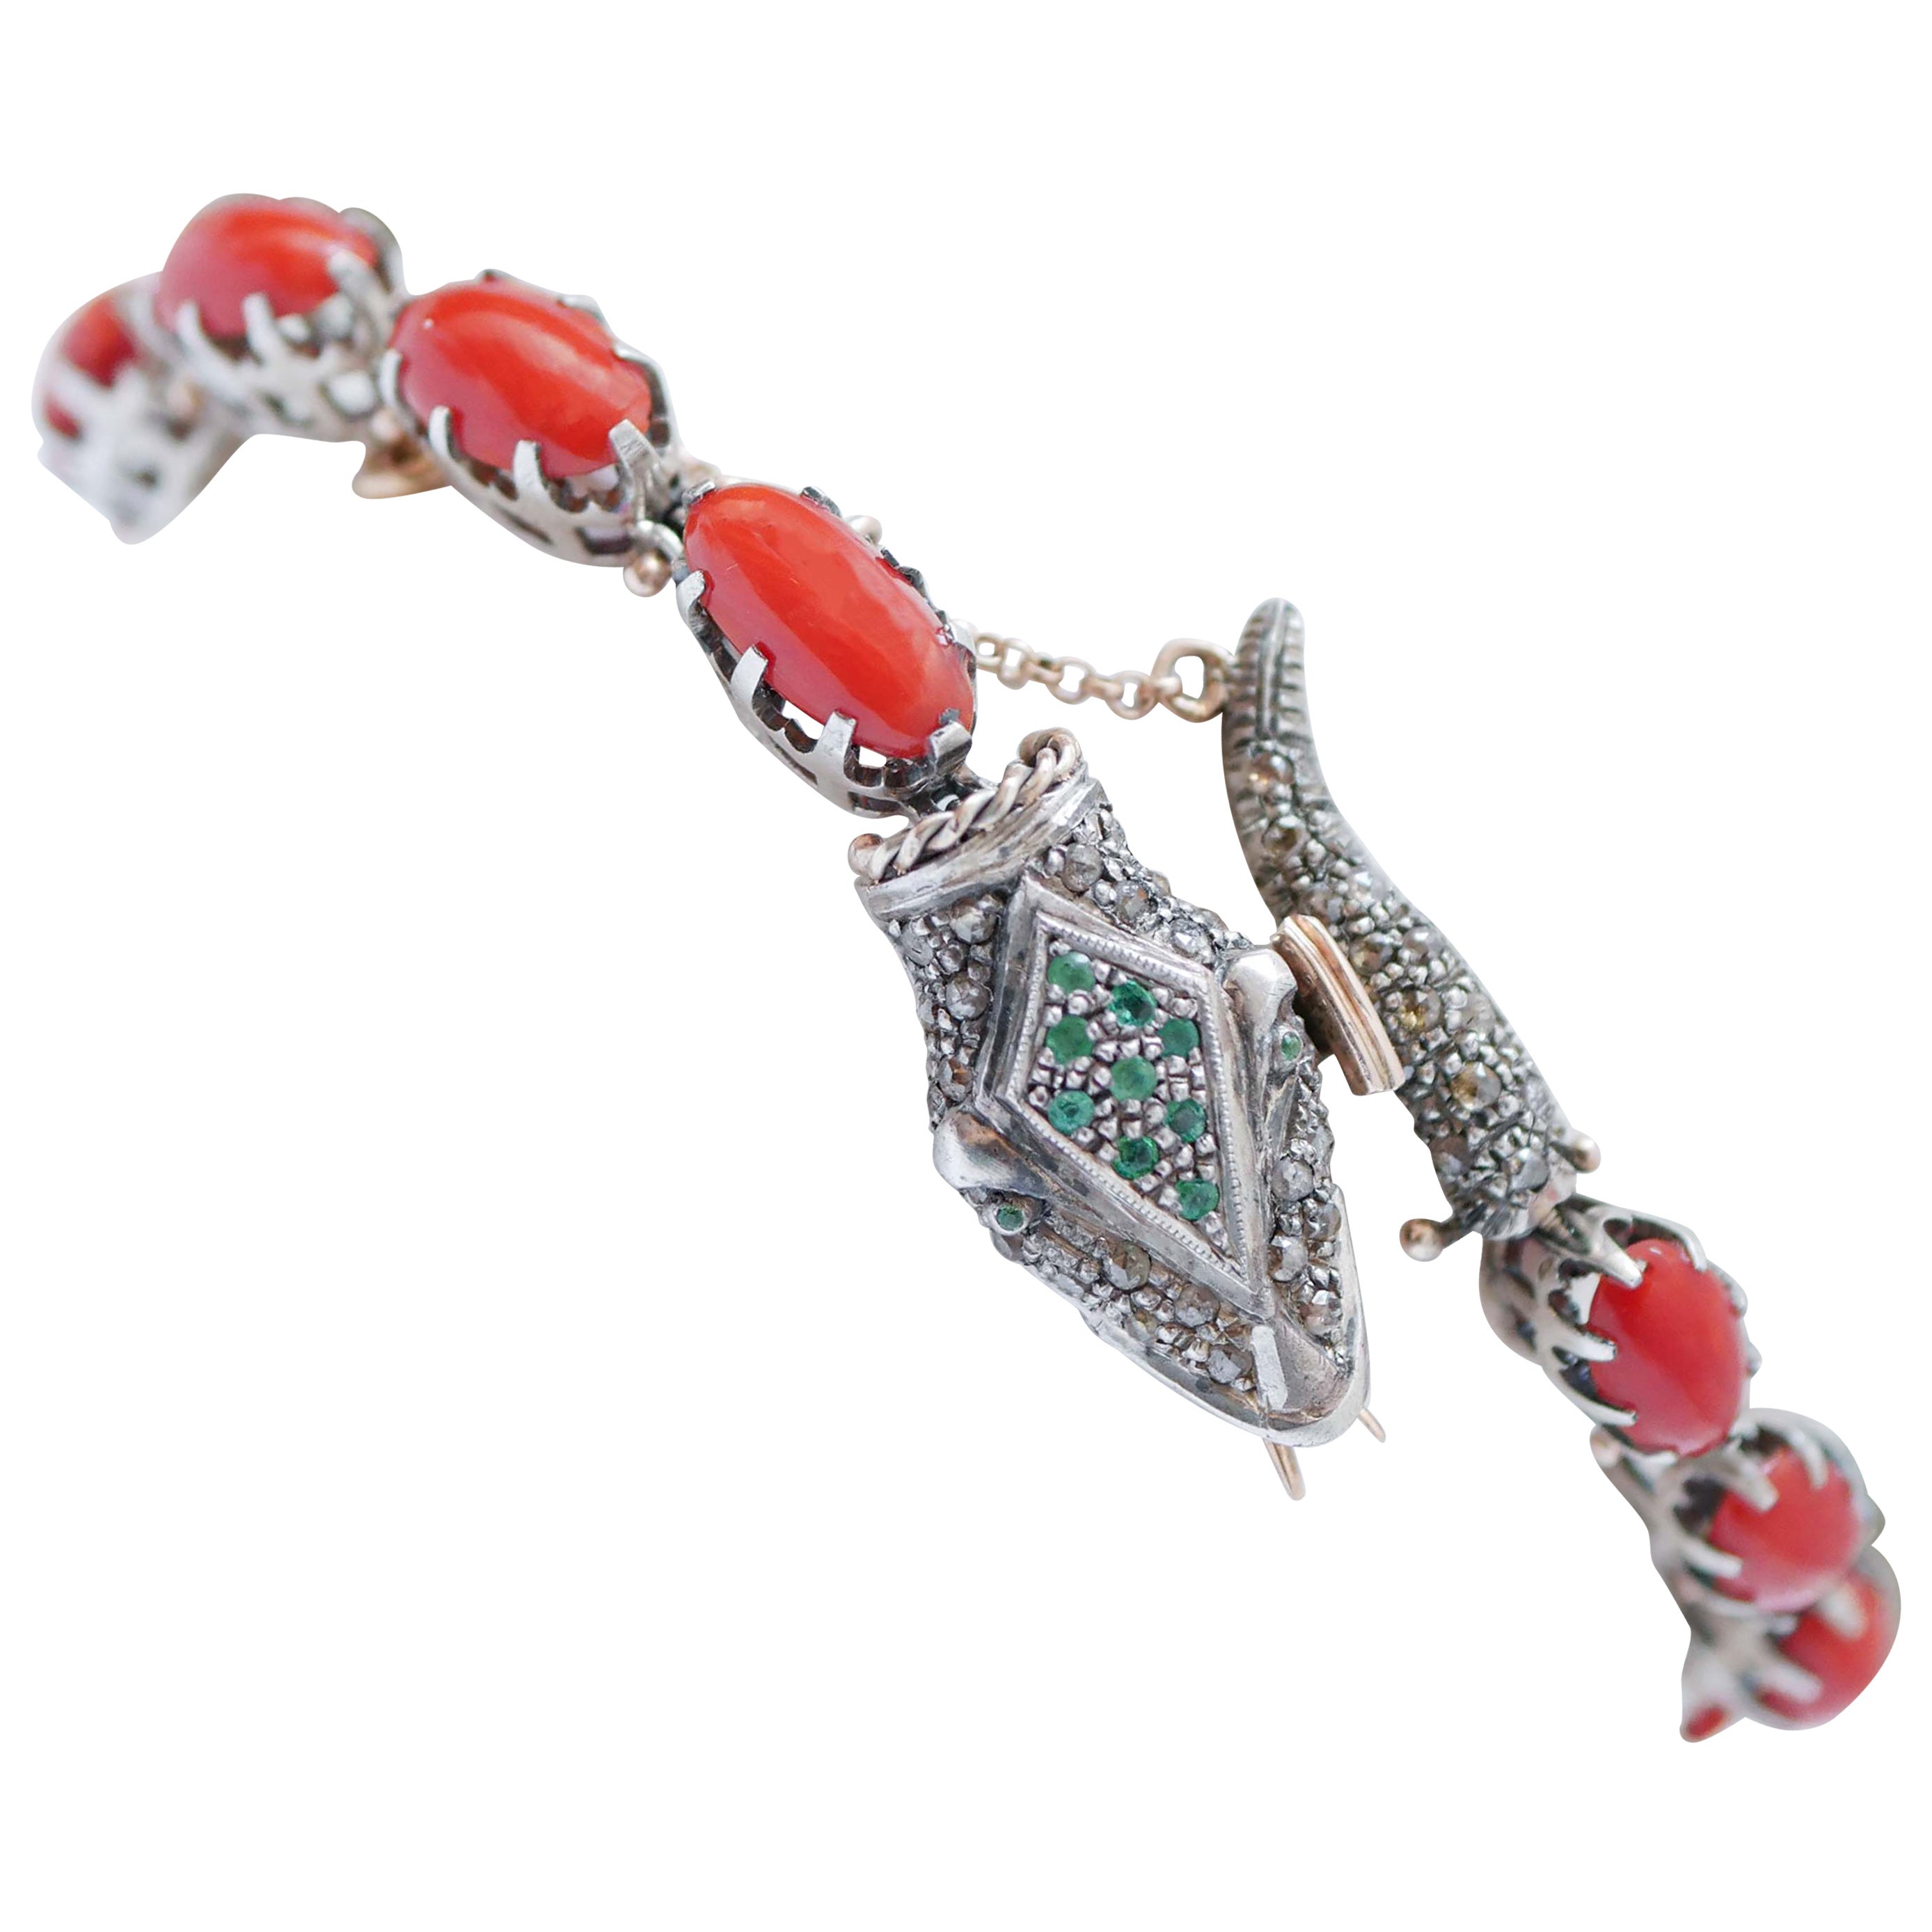 Coral, Tsavorite, Emeralds, Diamonds, Rose Gold and Silver Snake Bracelet.